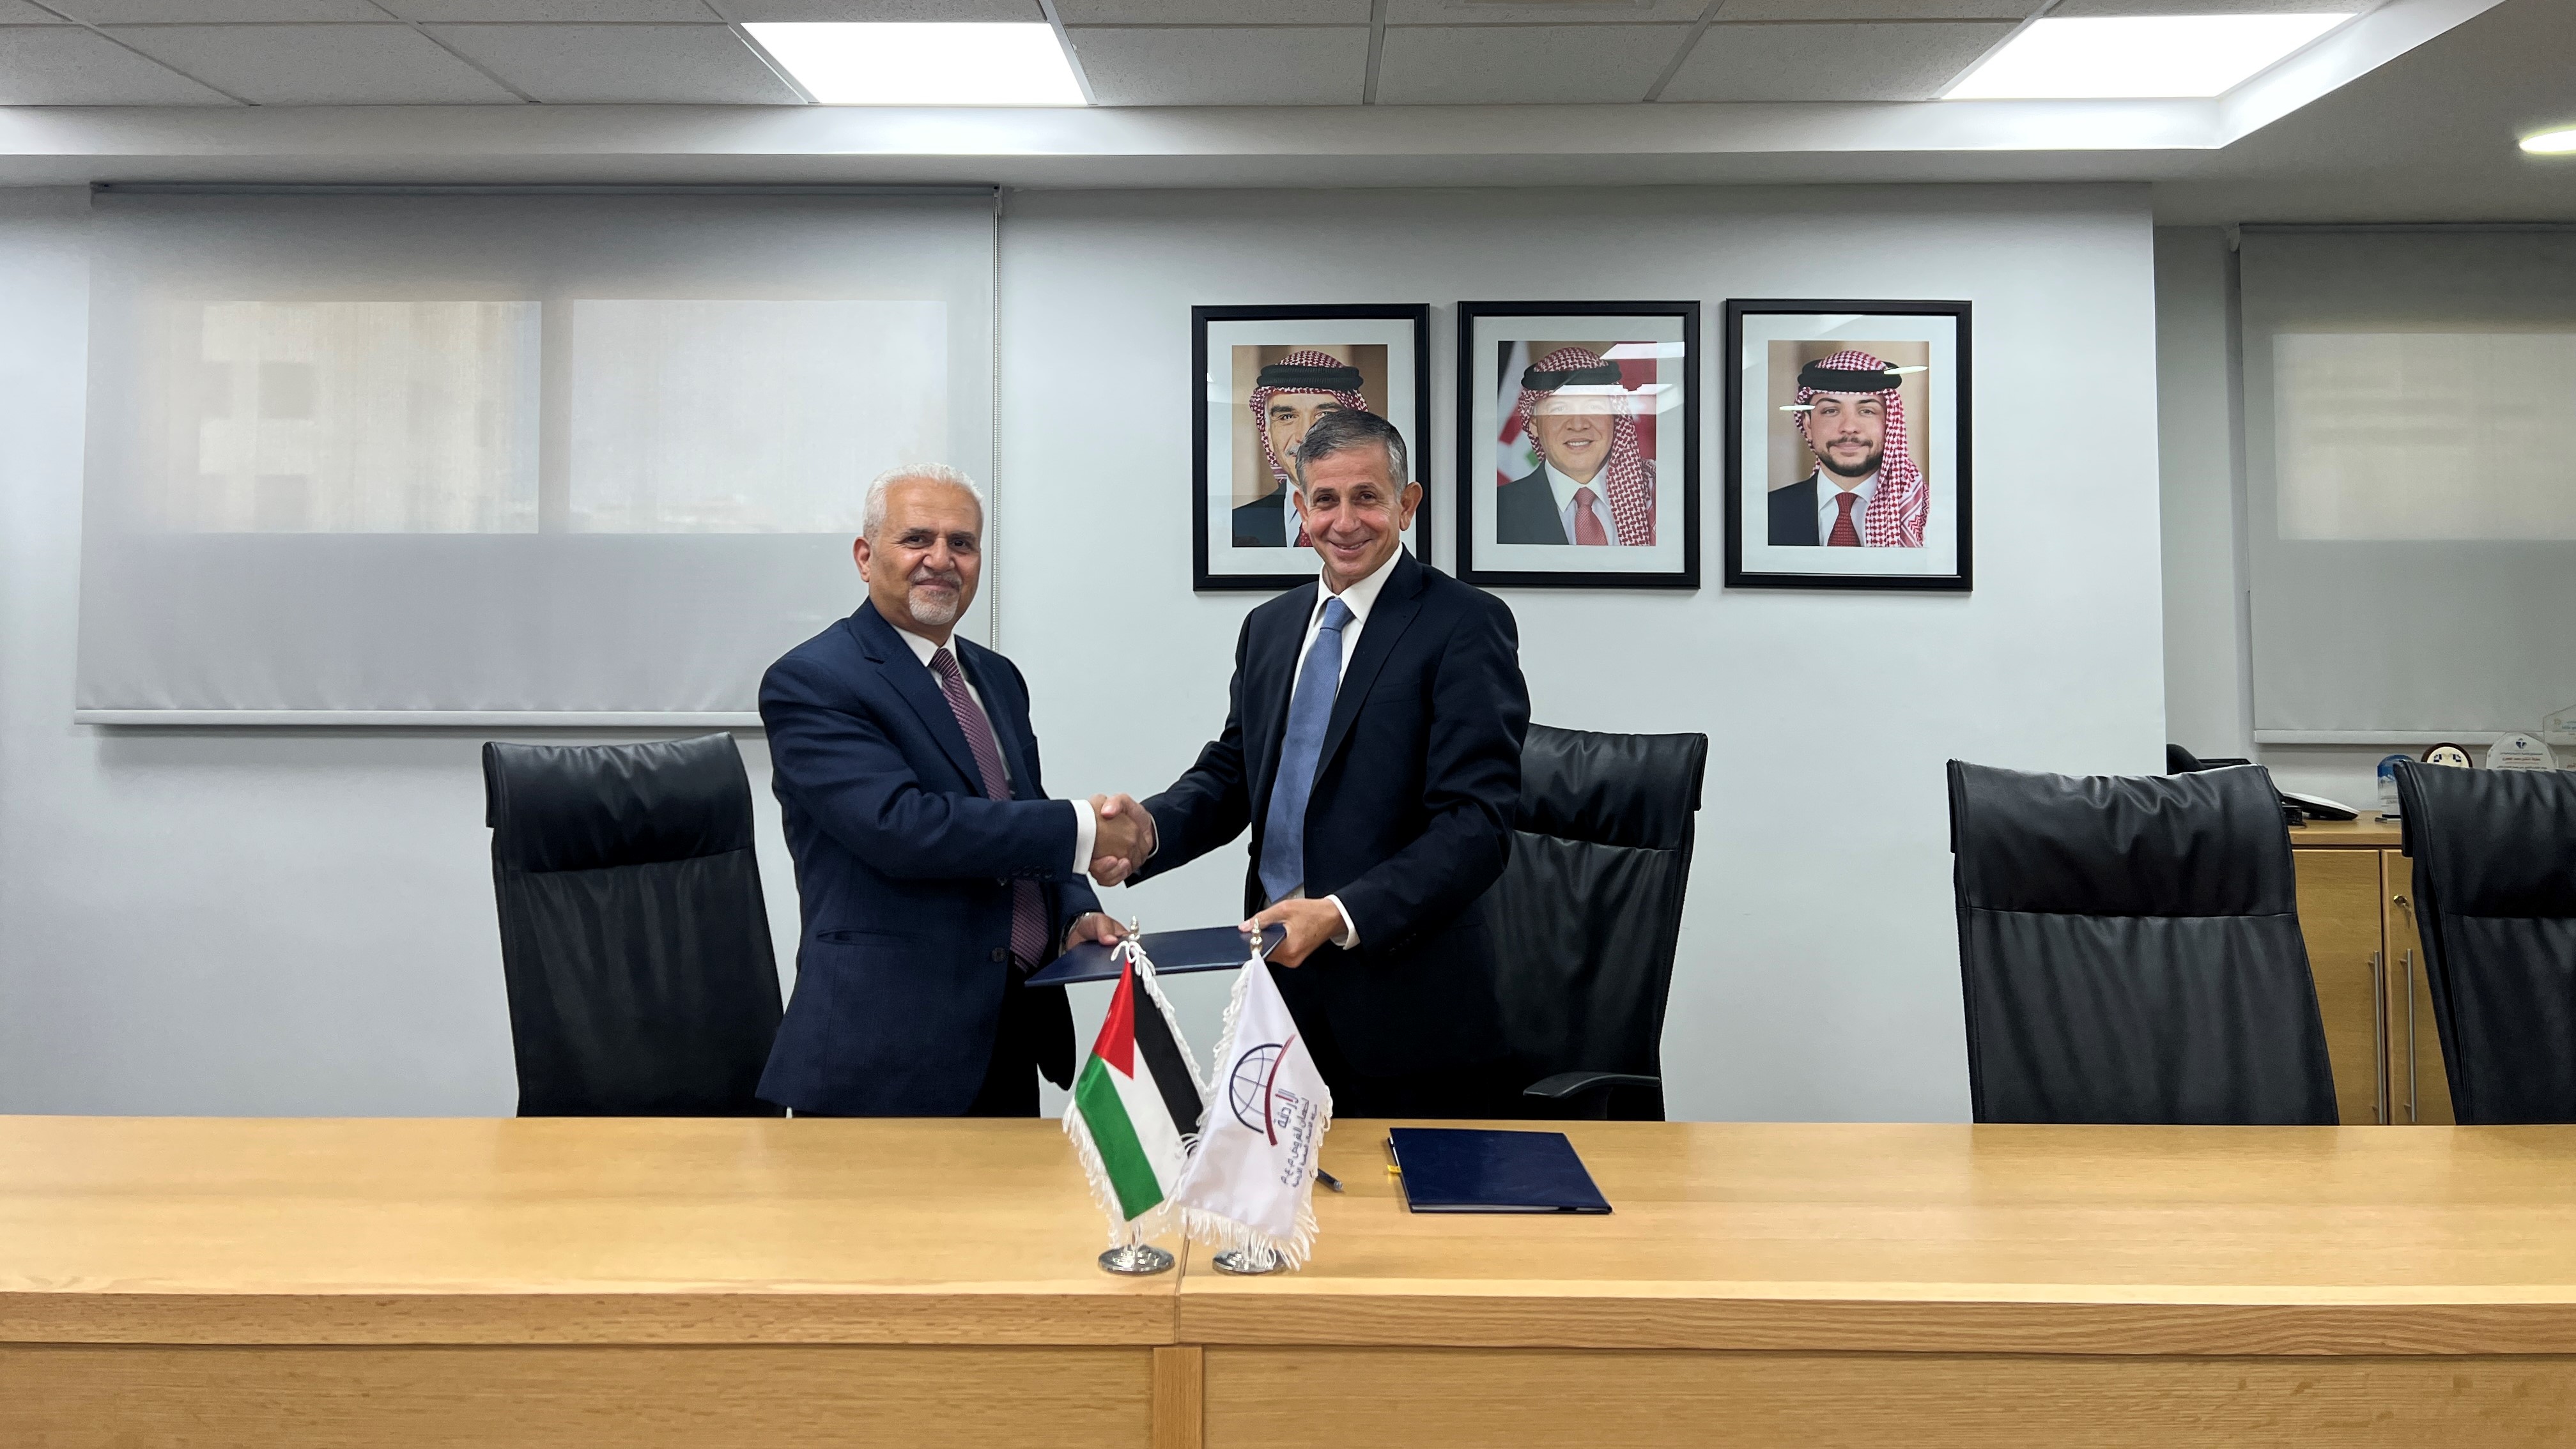 JLGC signs an agreement with Al-Namothajiah for Islamic Microfinance